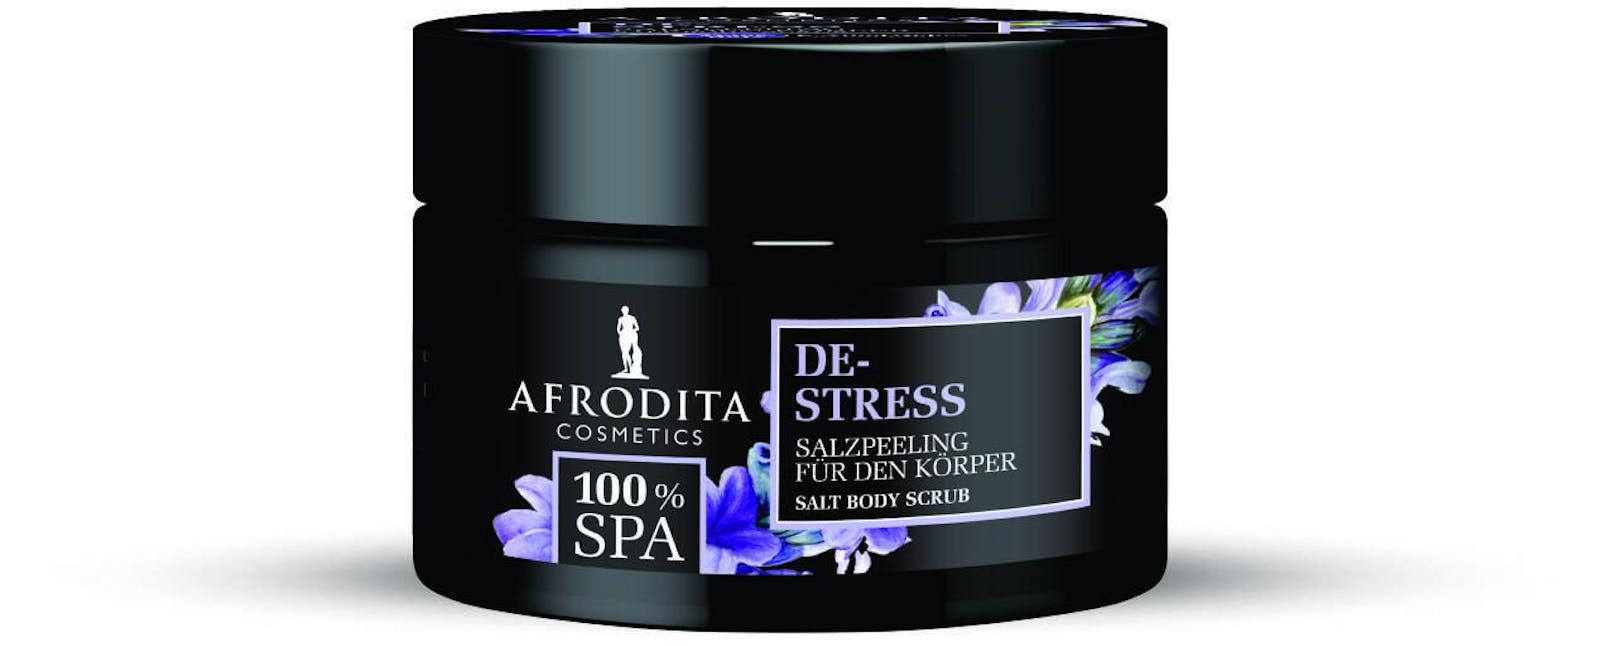 AFRODITA 100 % SPA De-Stress Salzpeeling